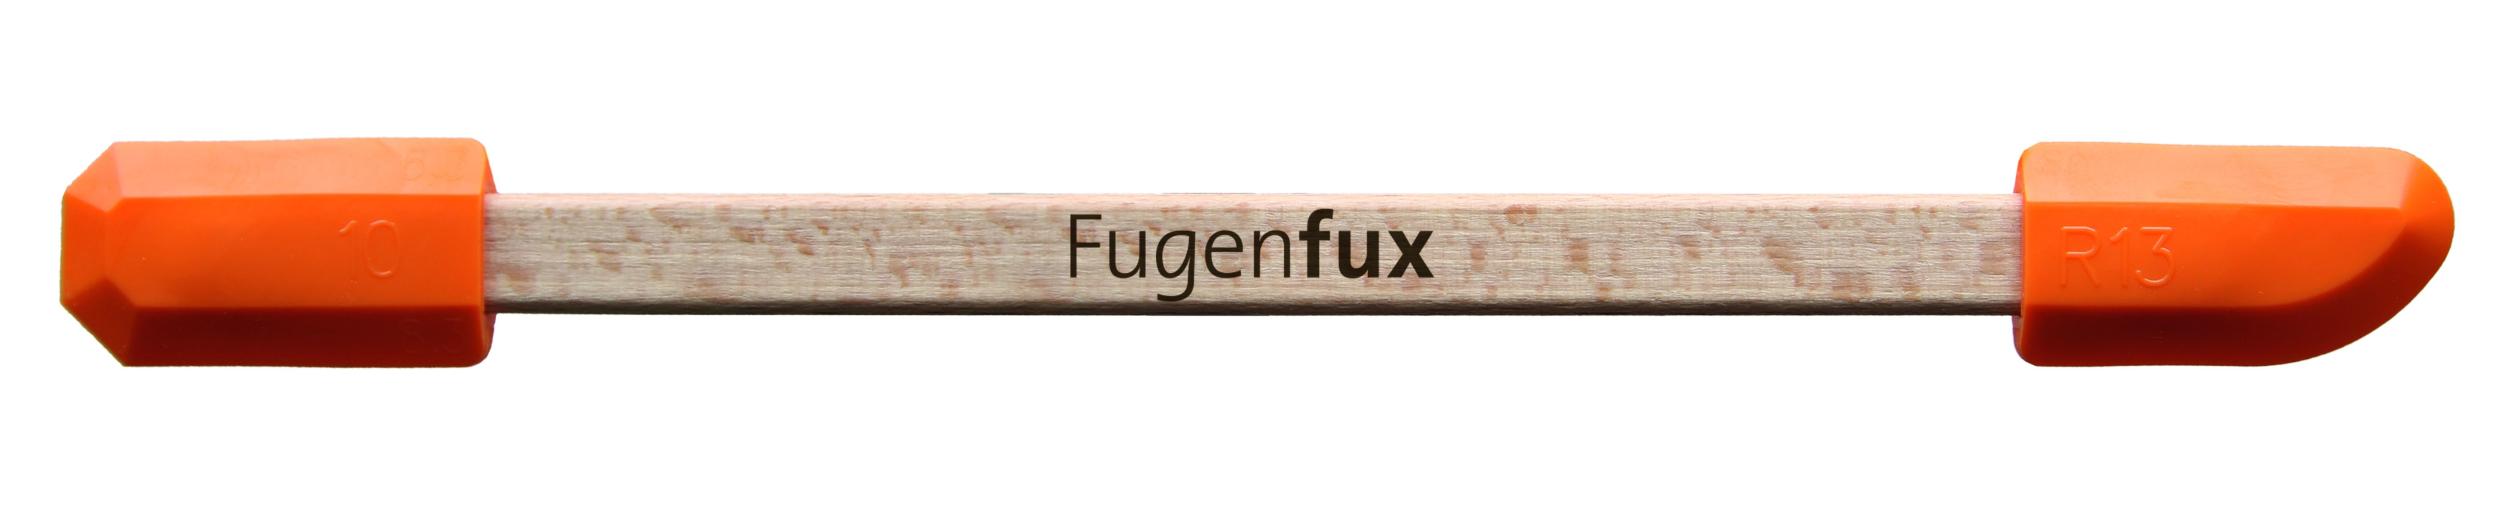 Fugenfux Multitool 3in1 Silikonabzieher